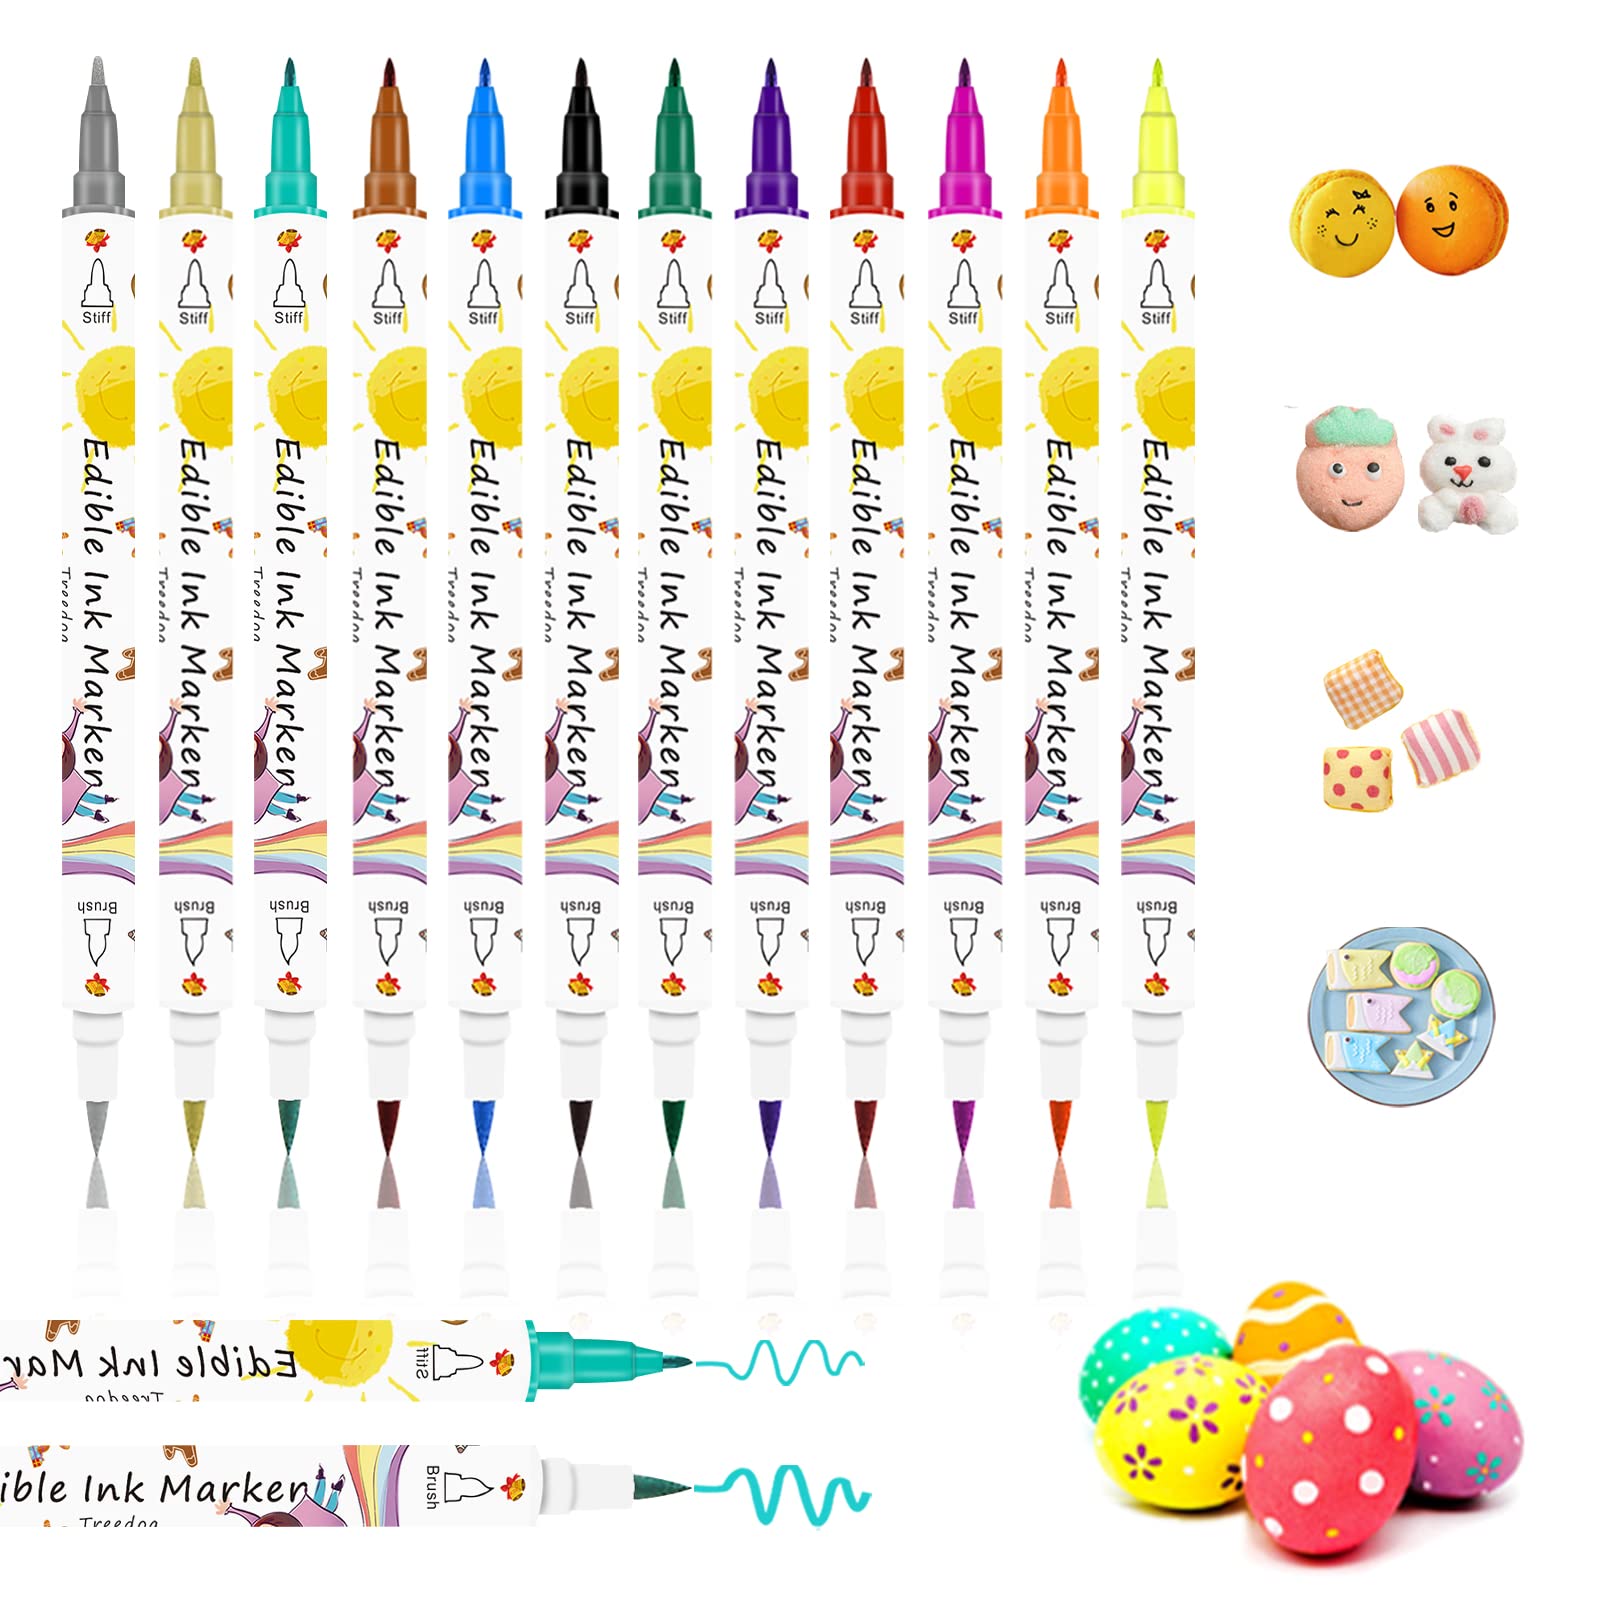 Food Coloring Markers Edible Pens For Cookie Decorating 12Pcs Food Grade  Gourmet Writers For DIY Fondant